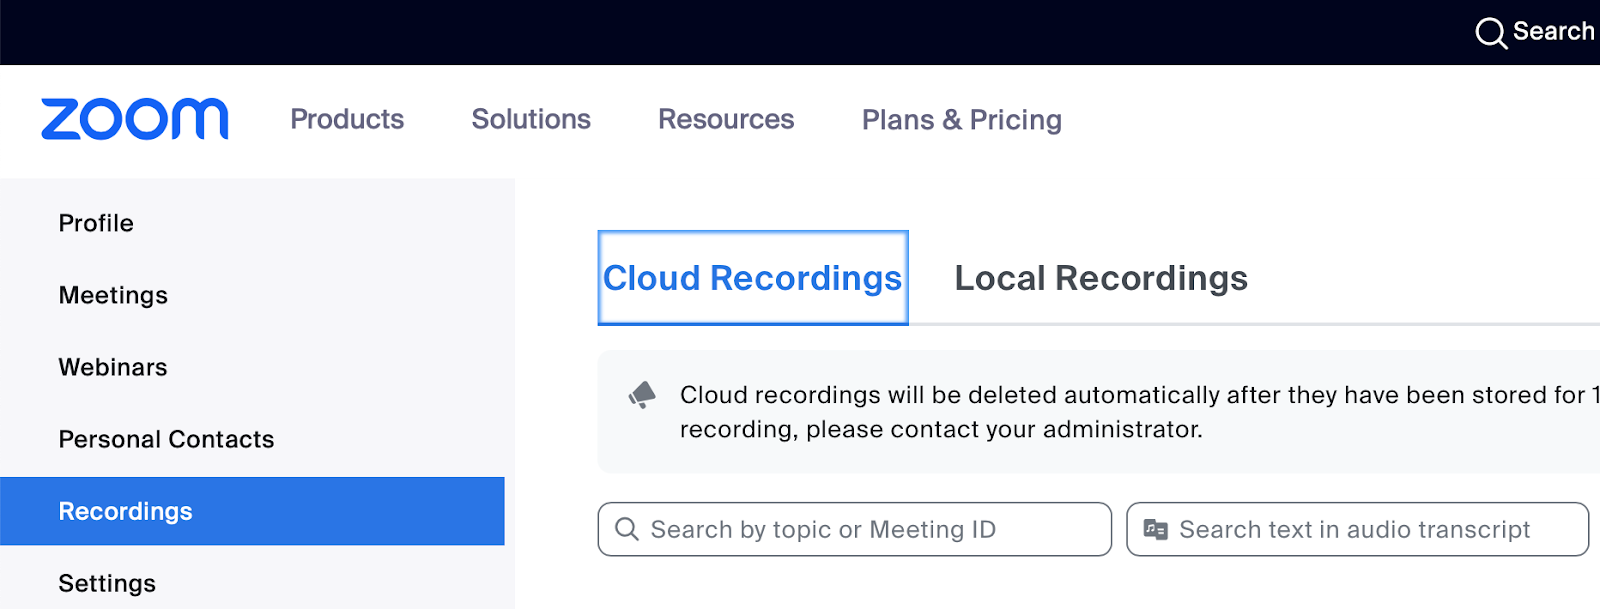 Zoom cloud recordings location